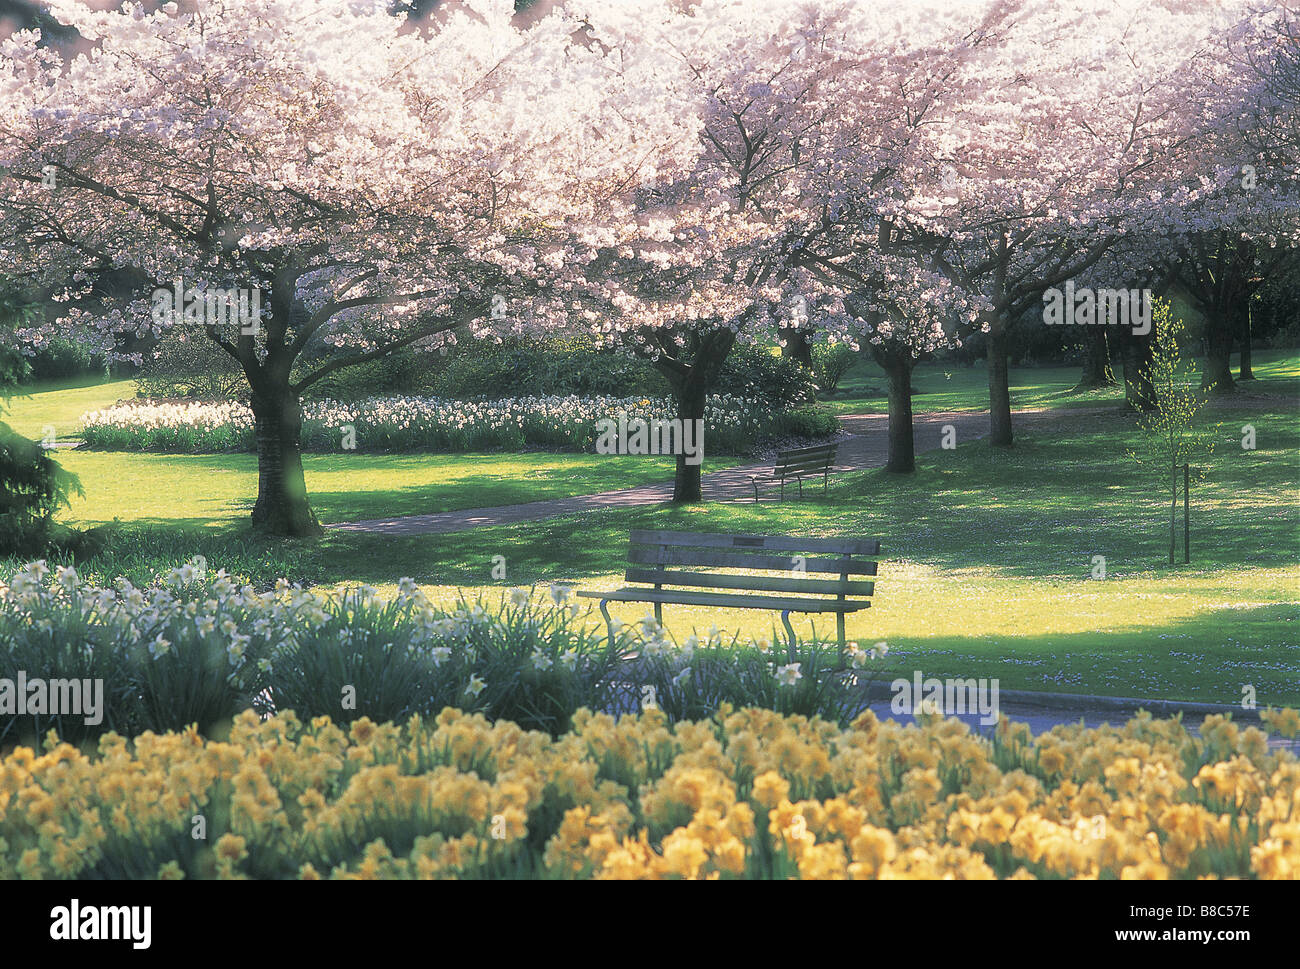 FL5550, David Nunuk; Trees Spring Blossoms Park Stock Photo